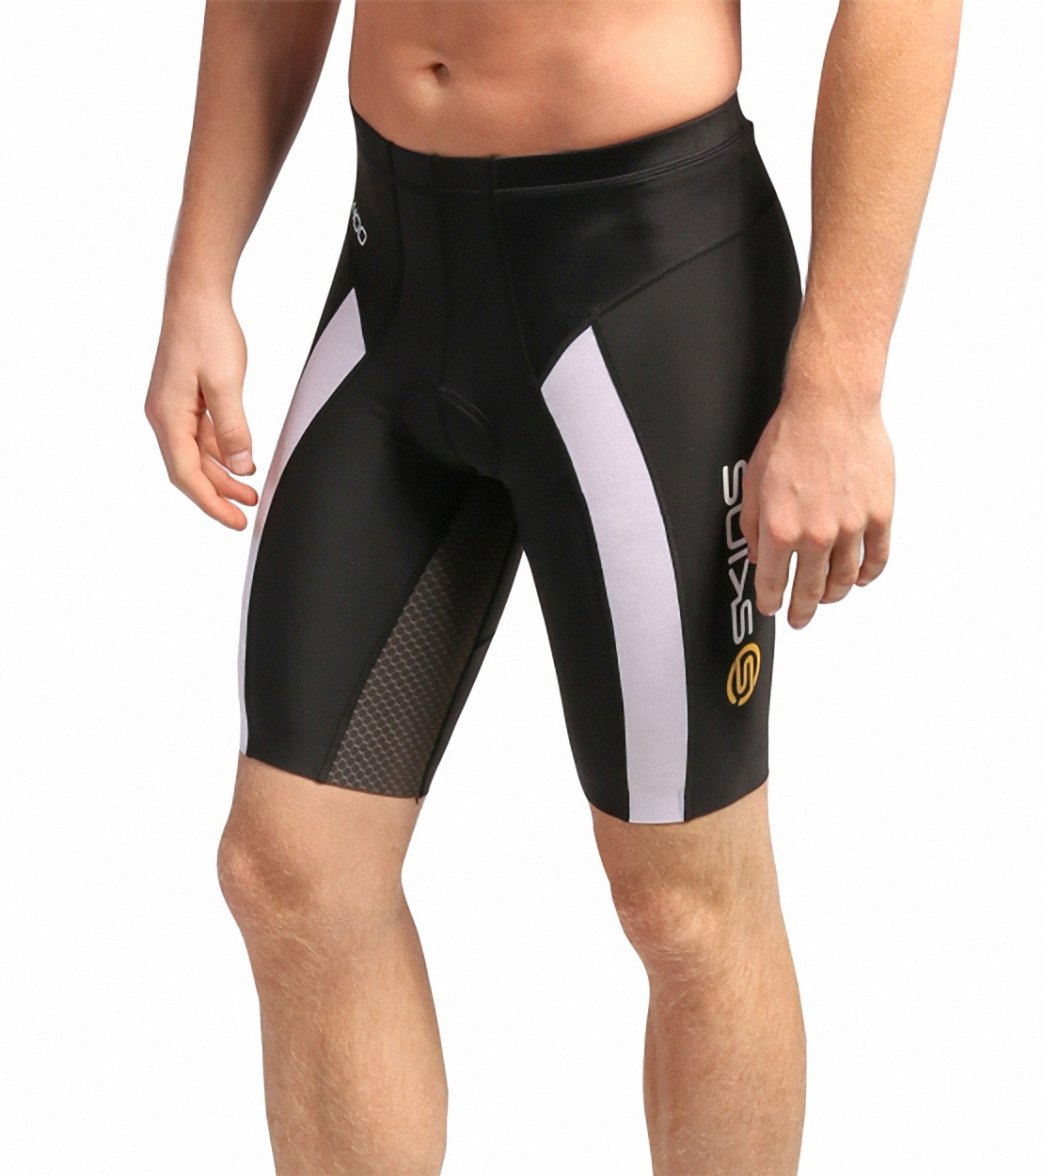 Skins Men's TRI400 Tri Shorts at SwimOutlet.com - Free Shipping